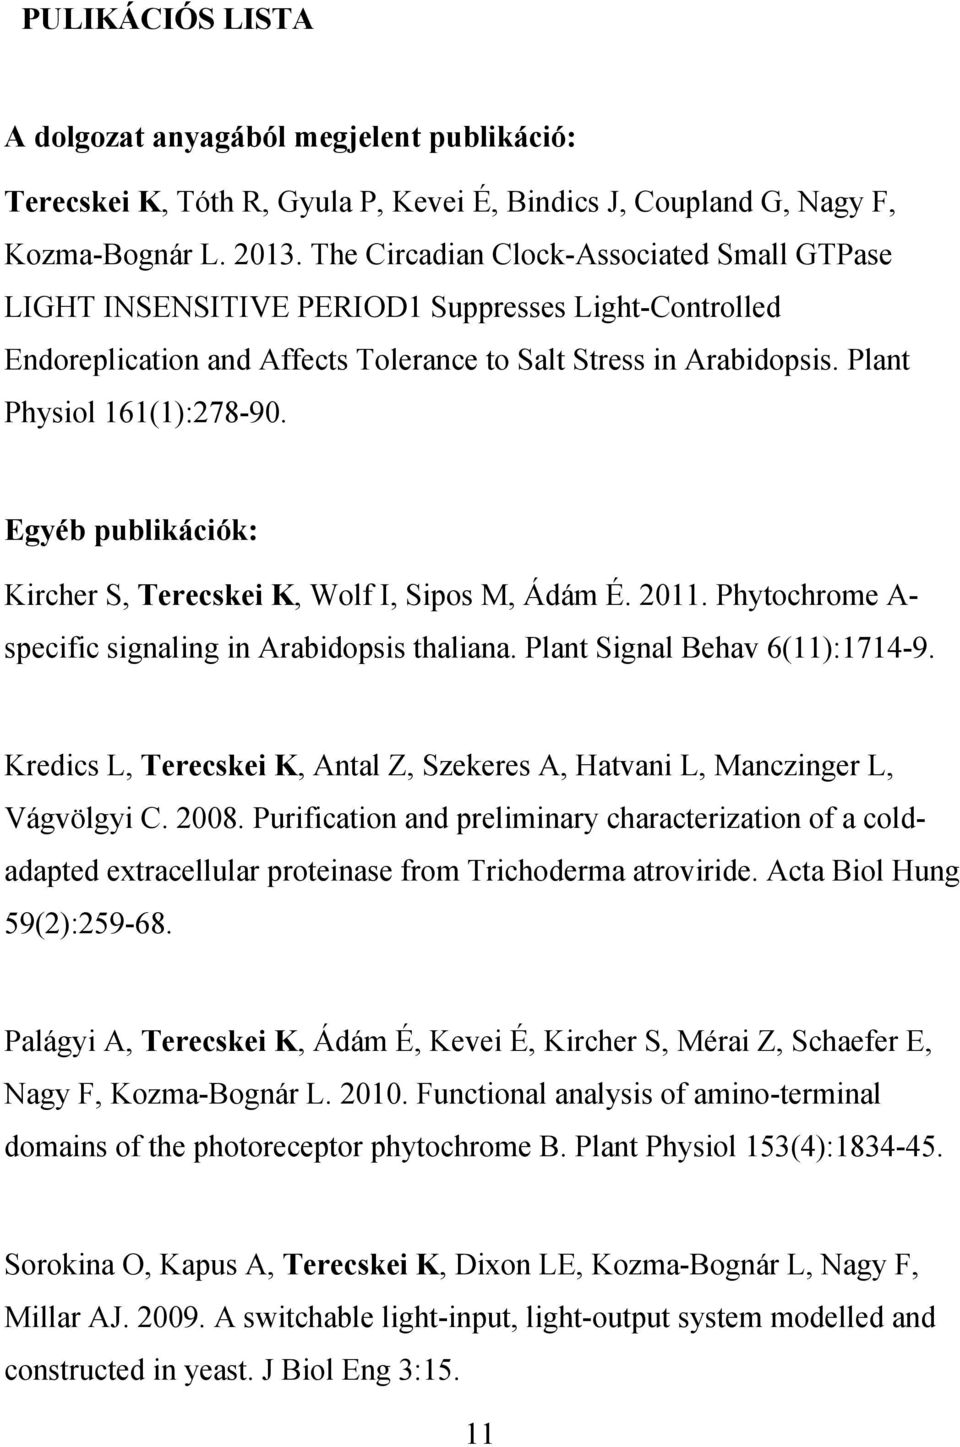 Egyéb publikációk: Kircher S, Terecskei K, Wolf I, Sipos M, Ádám É. 2011. Phytochrome A- specific signaling in Arabidopsis thaliana. Plant Signal Behav 6(11):1714-9.